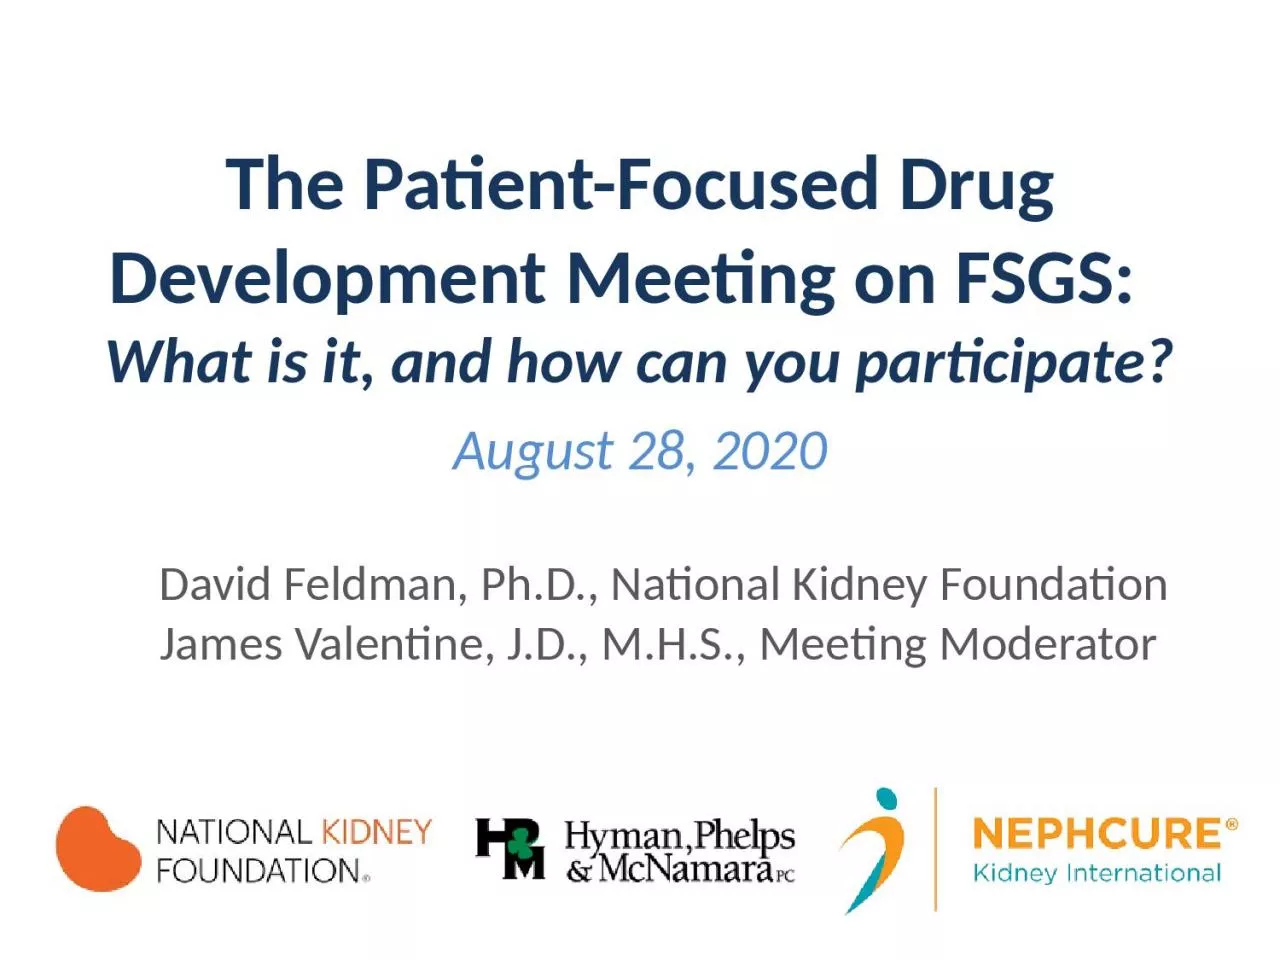 David Feldman, Ph.D., National Kidney Foundation